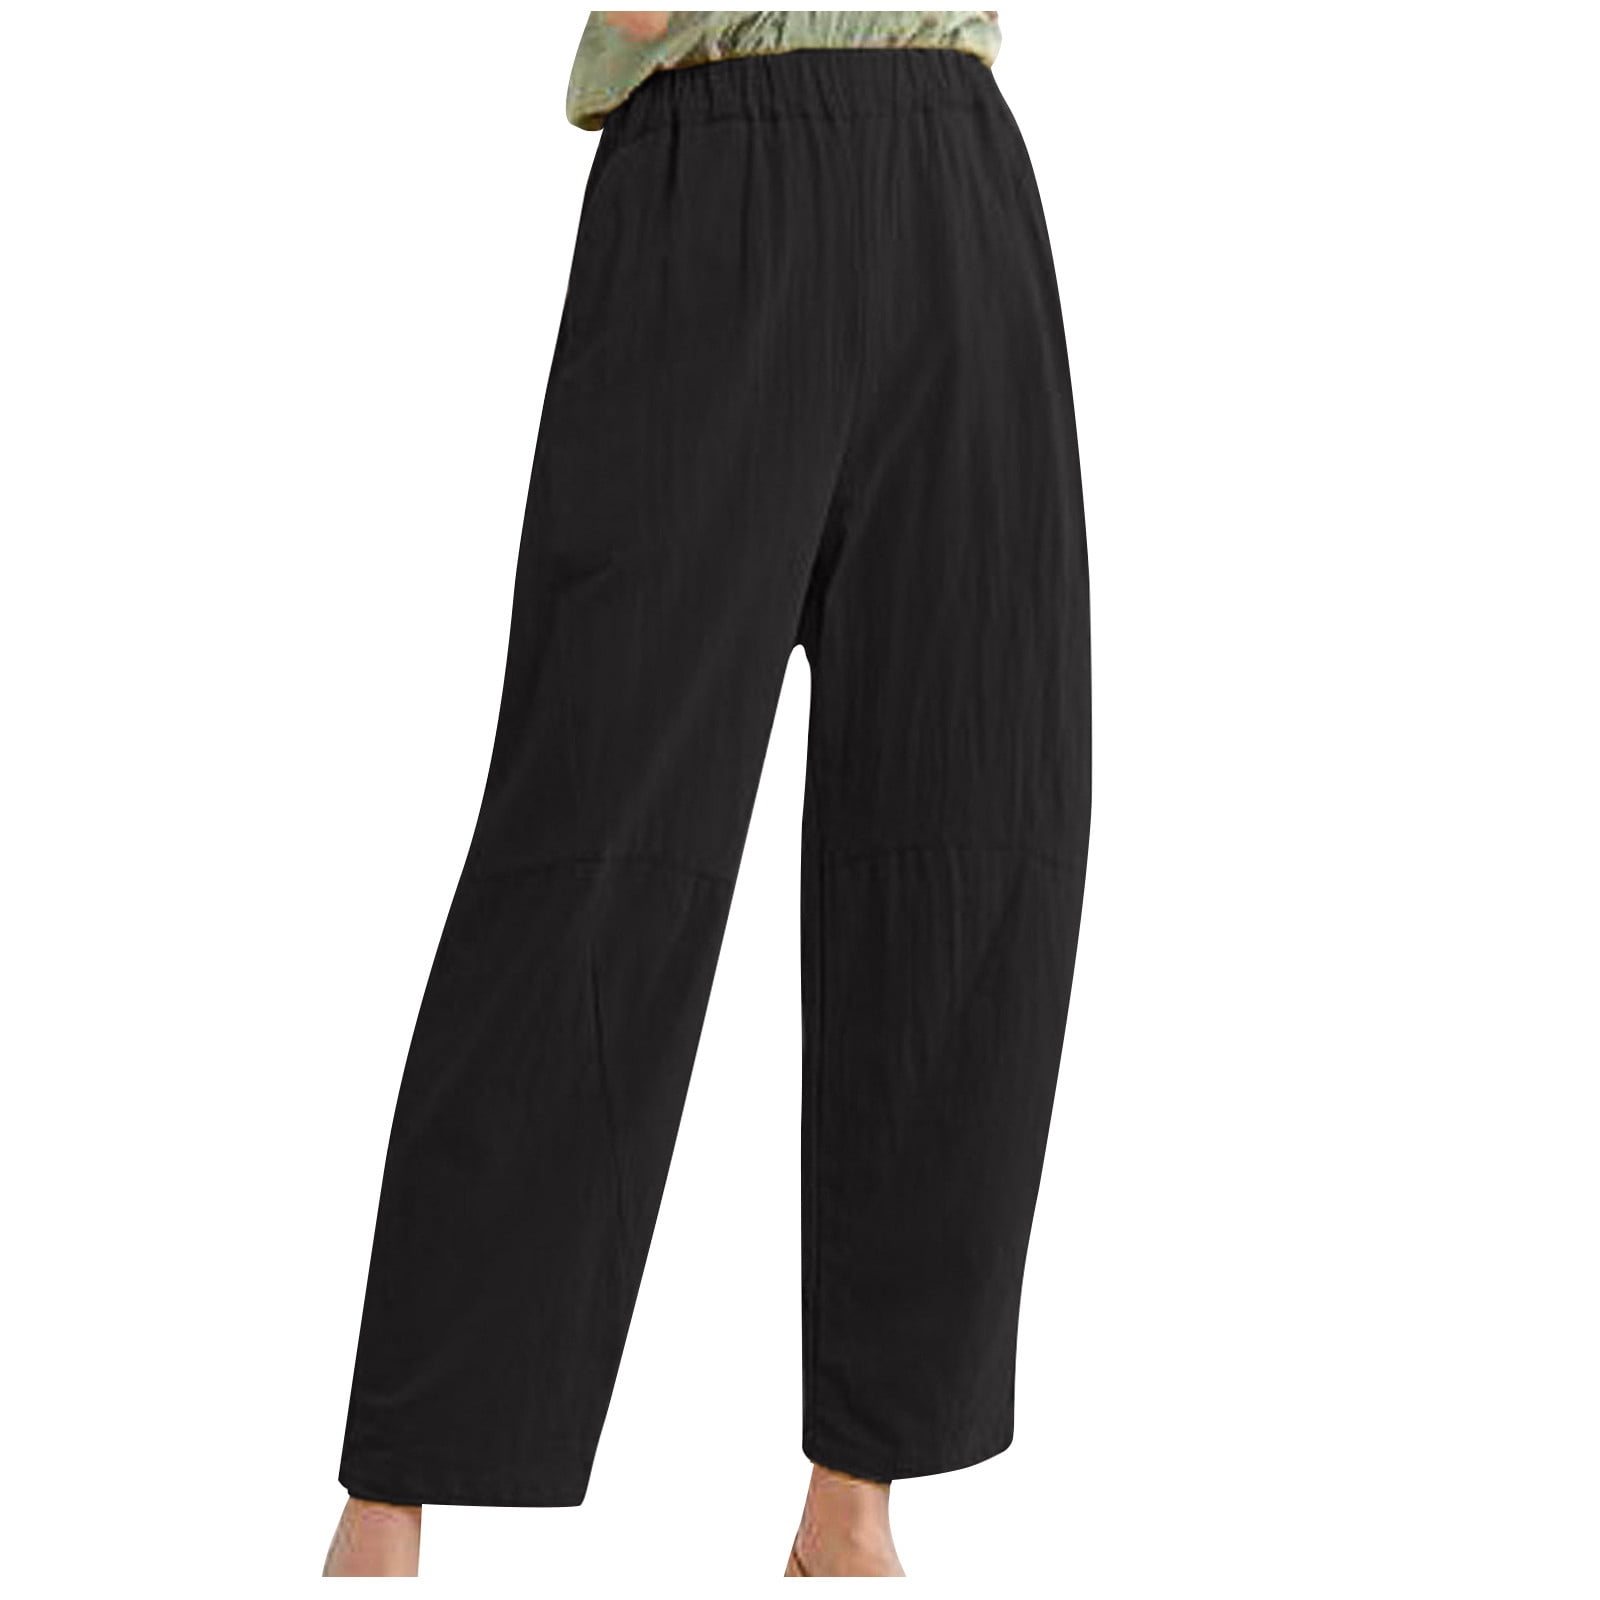 Henpk Womens Cotton Linen Bermuda Shorts Yoga Pants Tummy Control ...